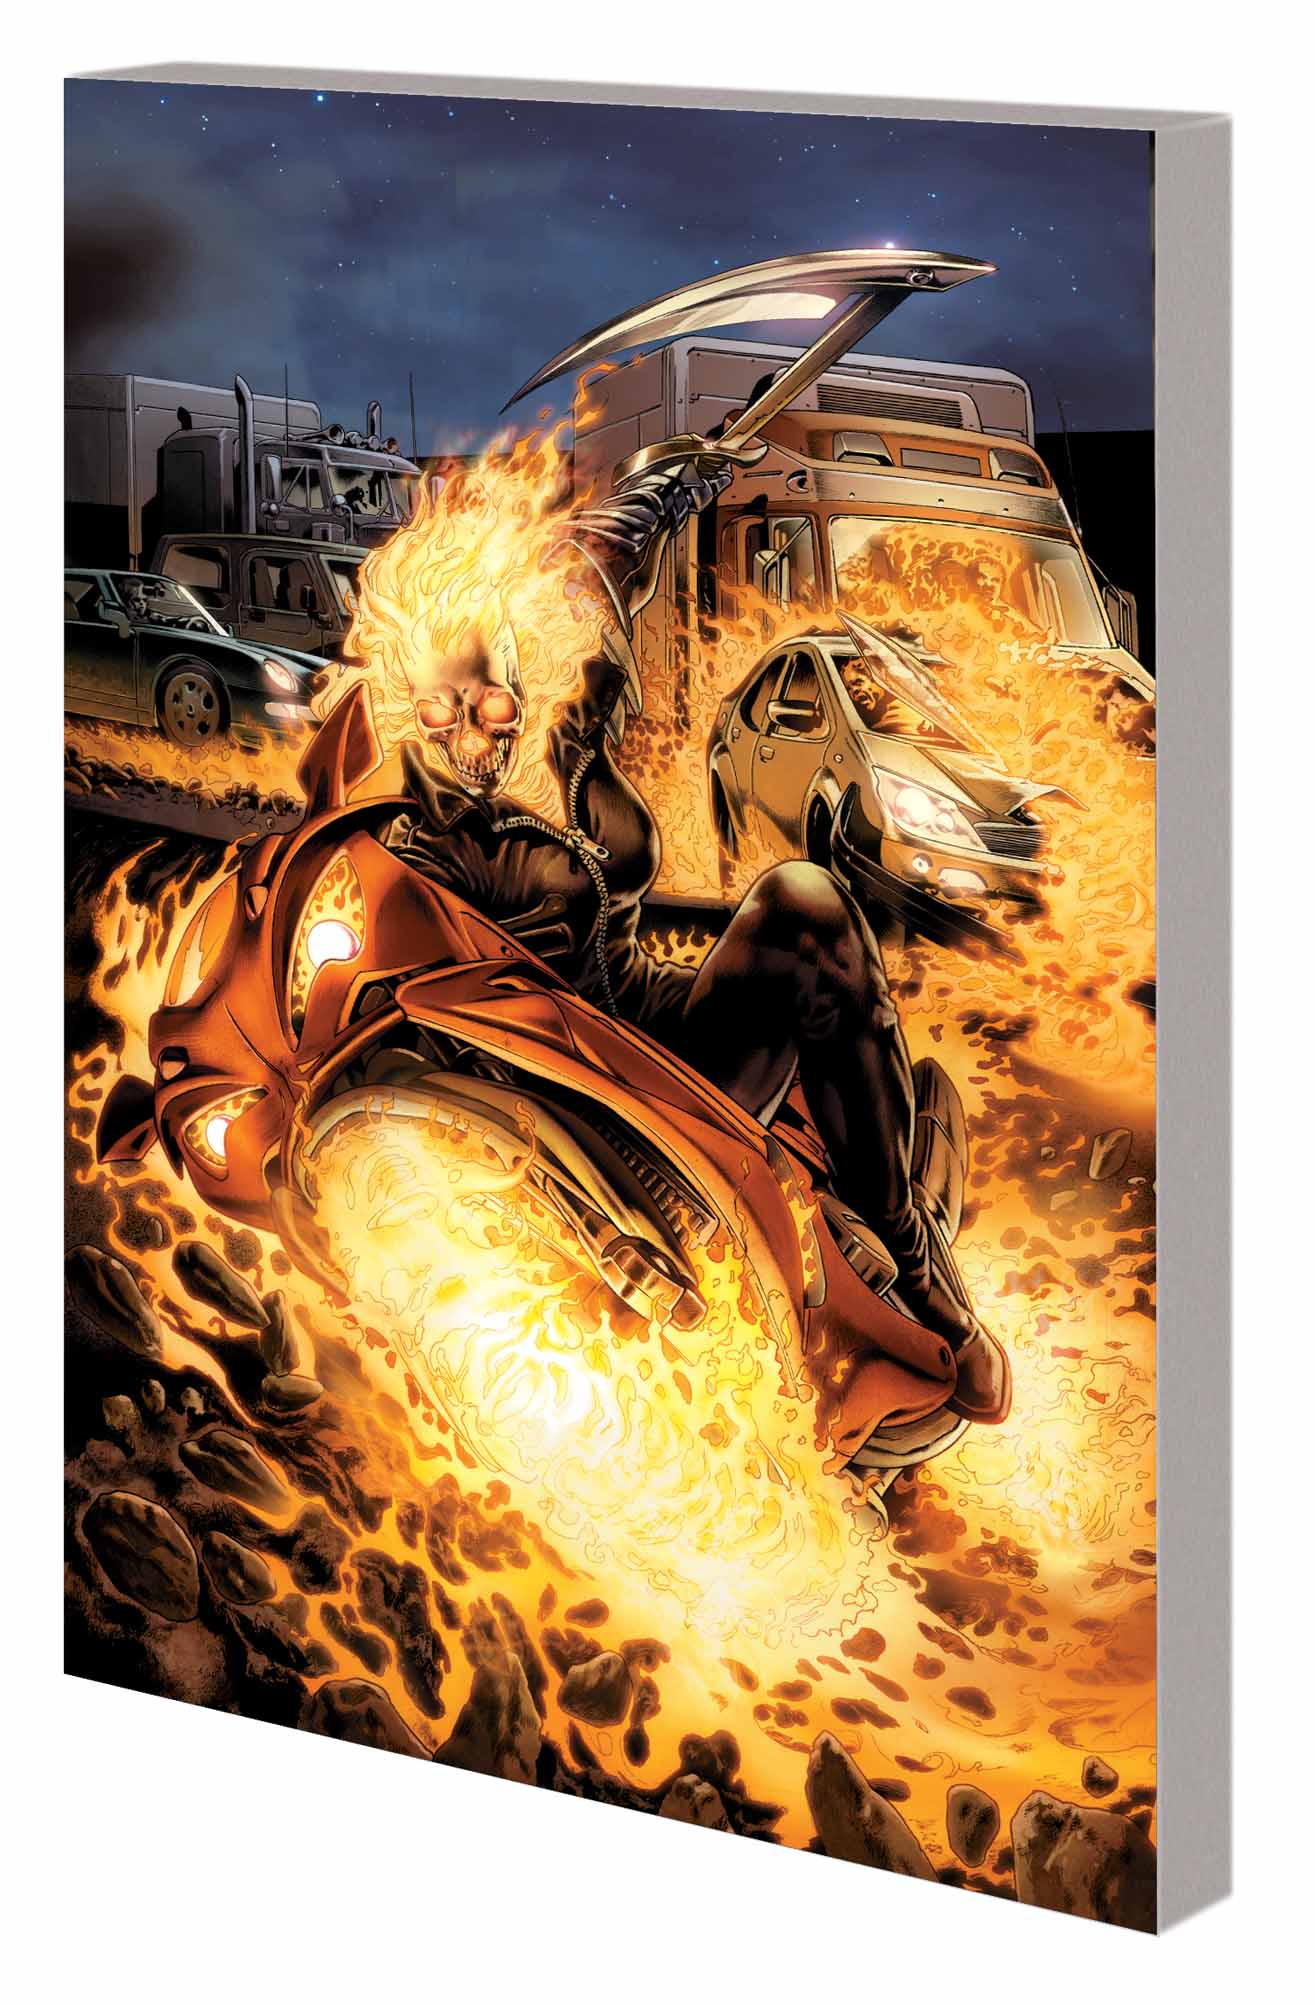 Ghost Rider Vol. 1 (Trade Paperback)